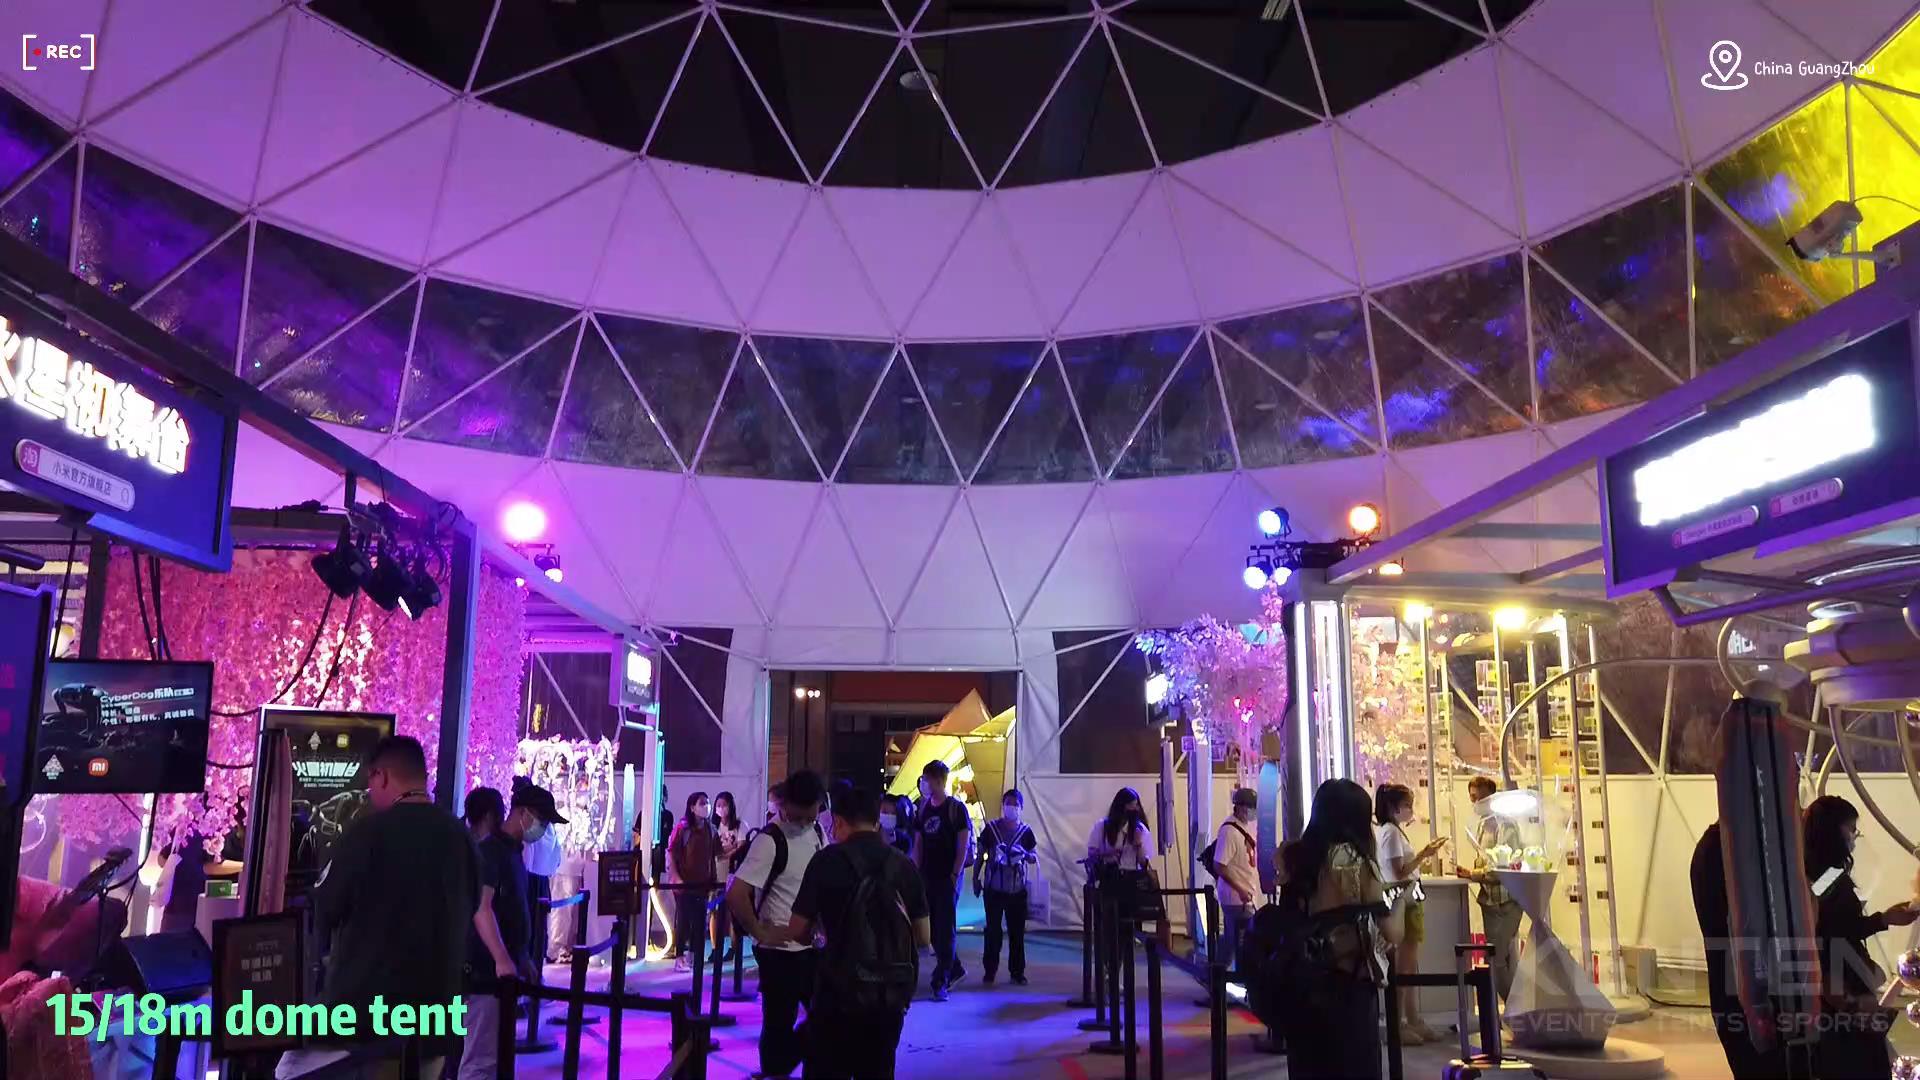 15/18m Dome Tent Case Video - 2022 China Guangzhou Maker Festival